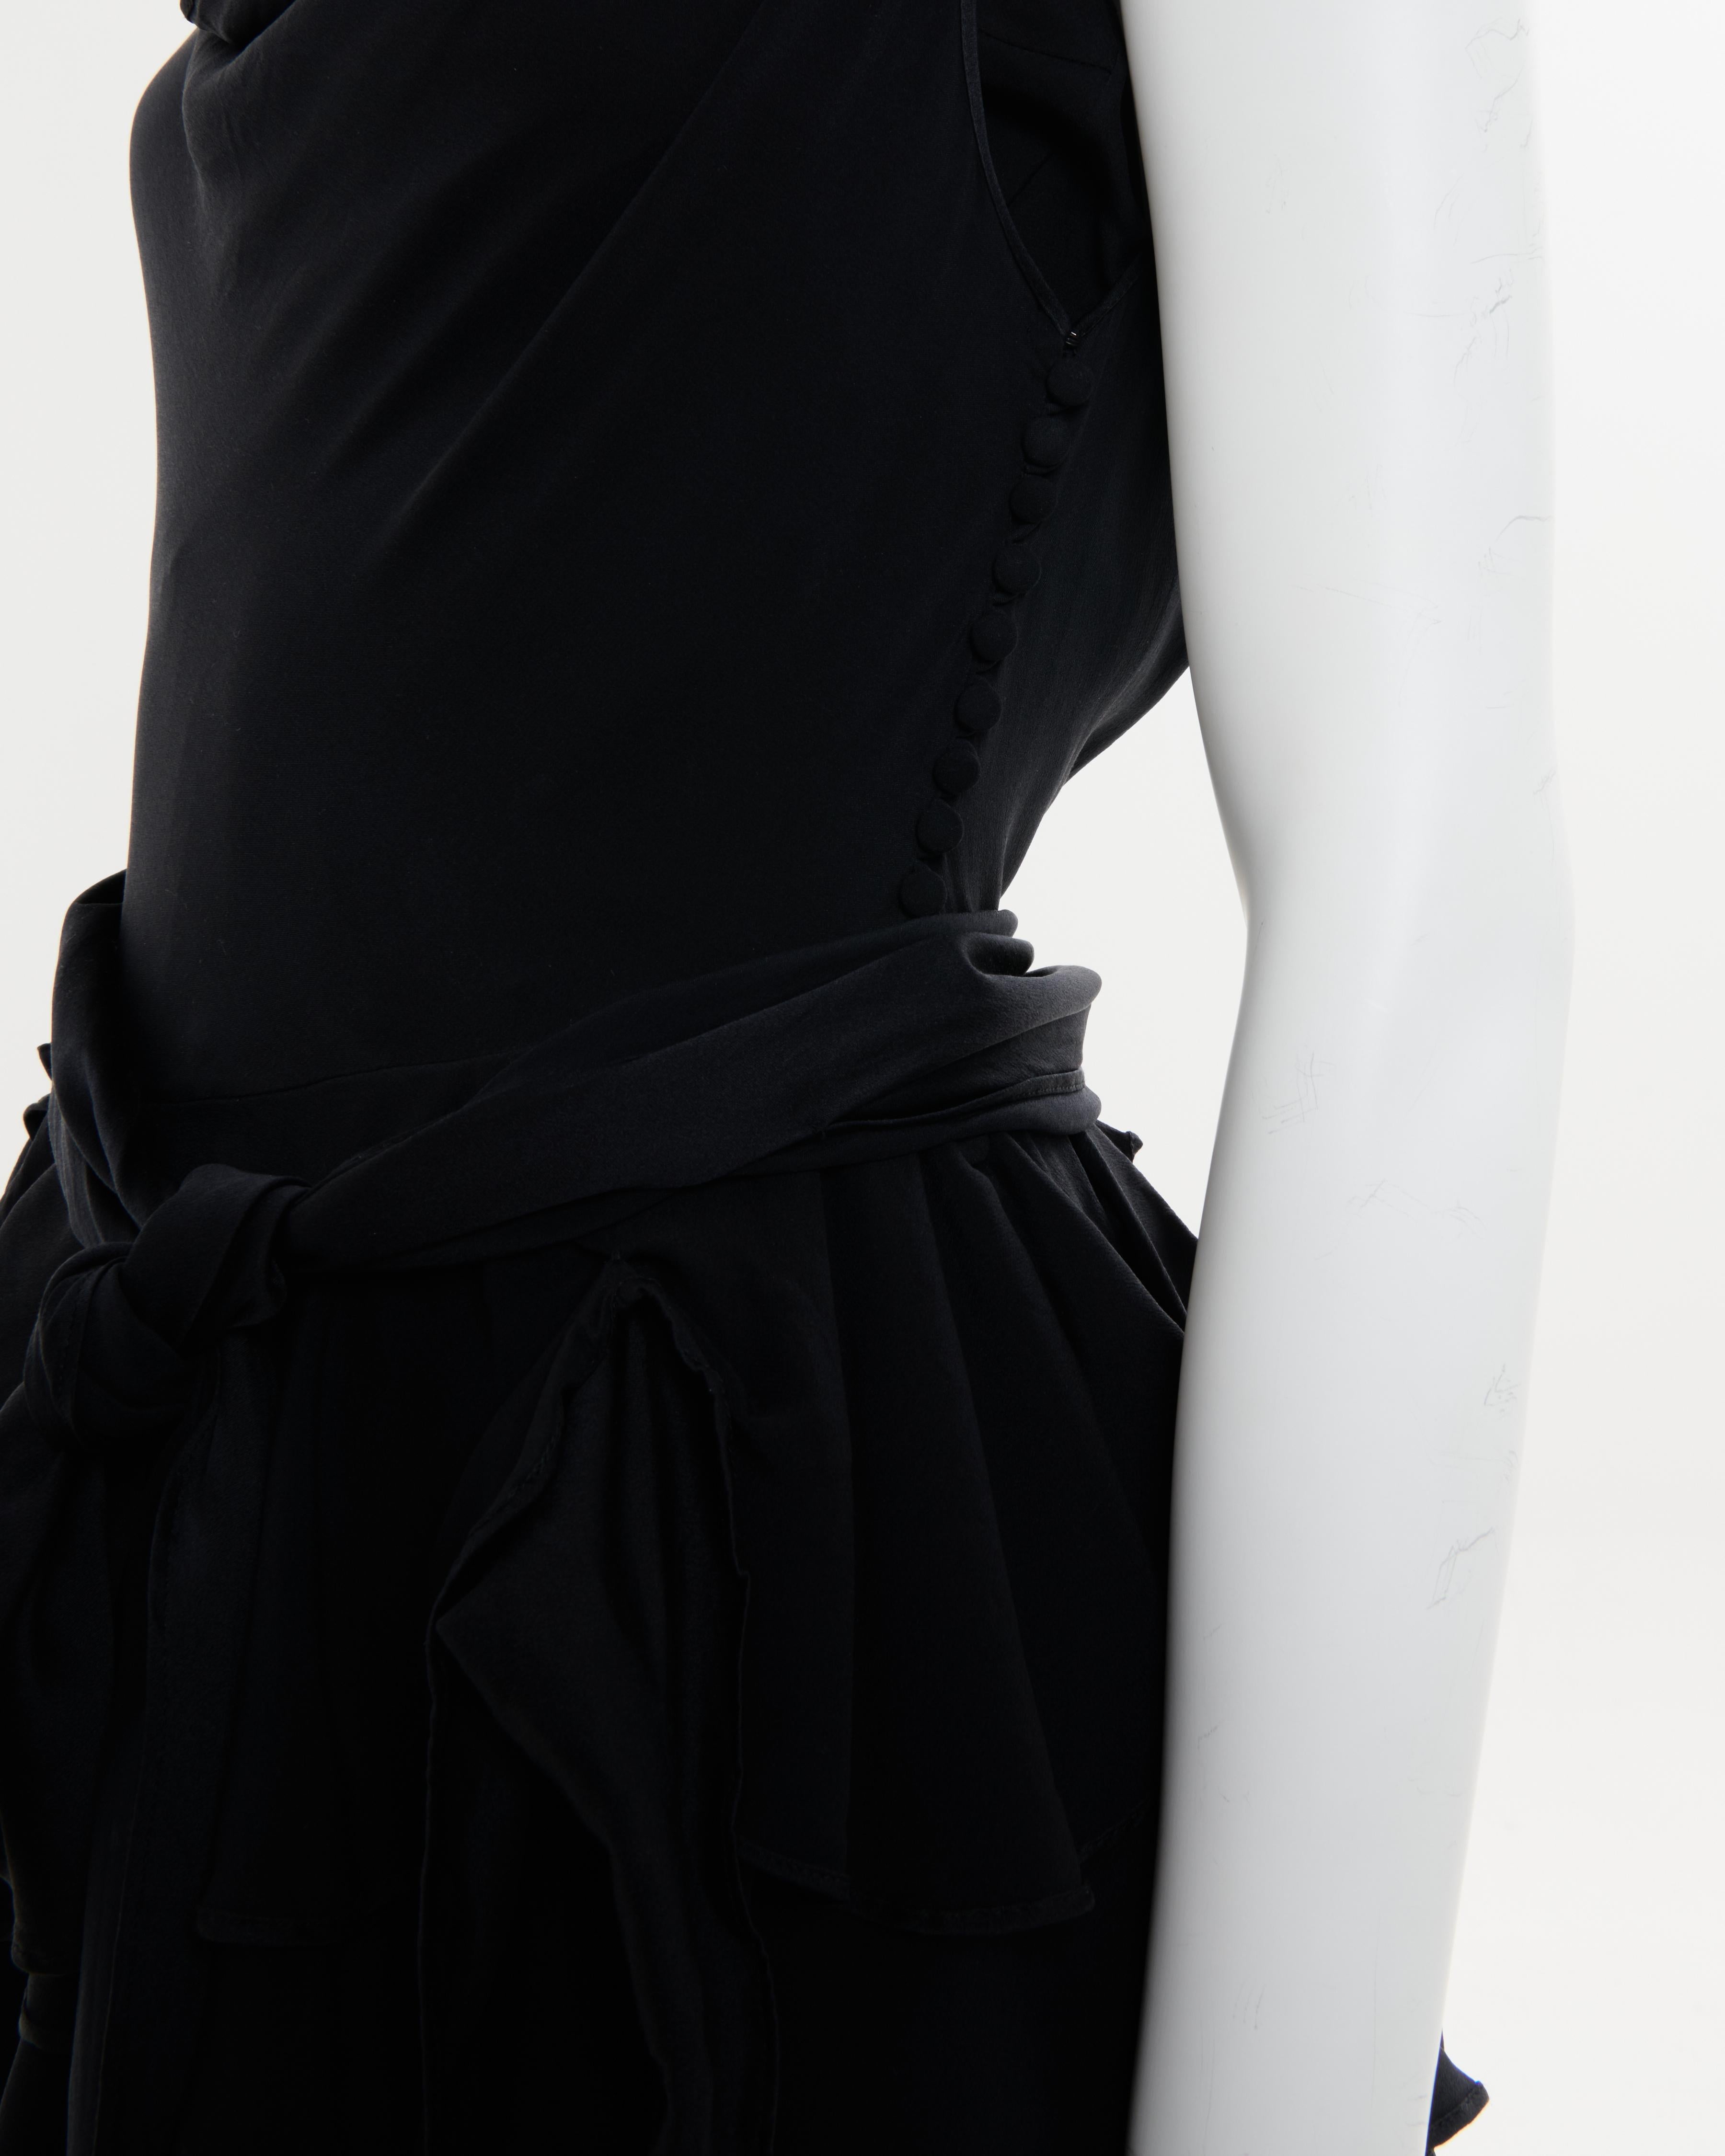 Christian Dior by John Galliano F/W 2006 Black silk bias-cut evening dress 5